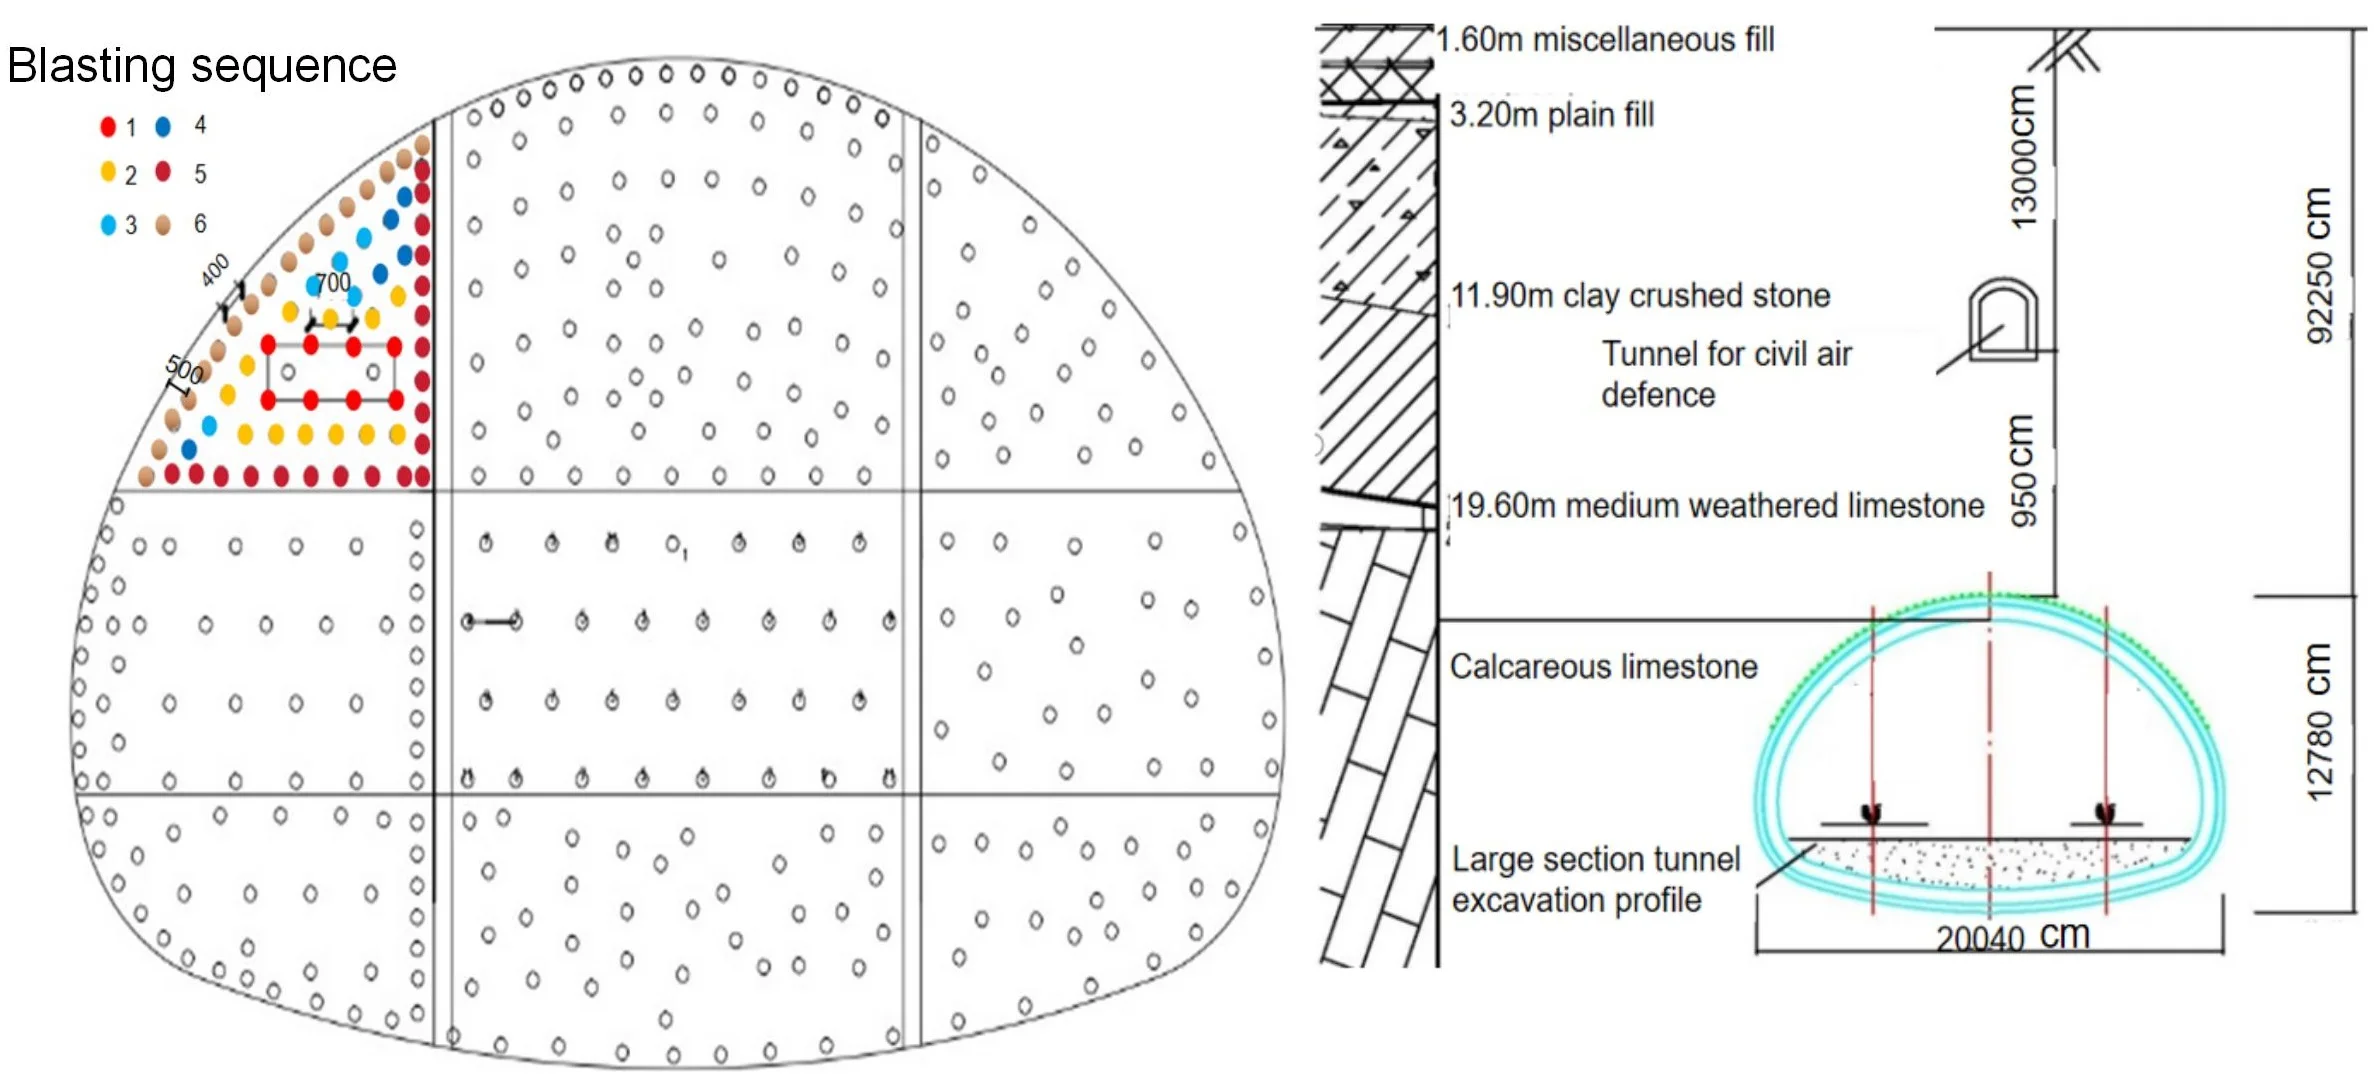 Stability analysis of civil air defense tunnel under blasting vibration